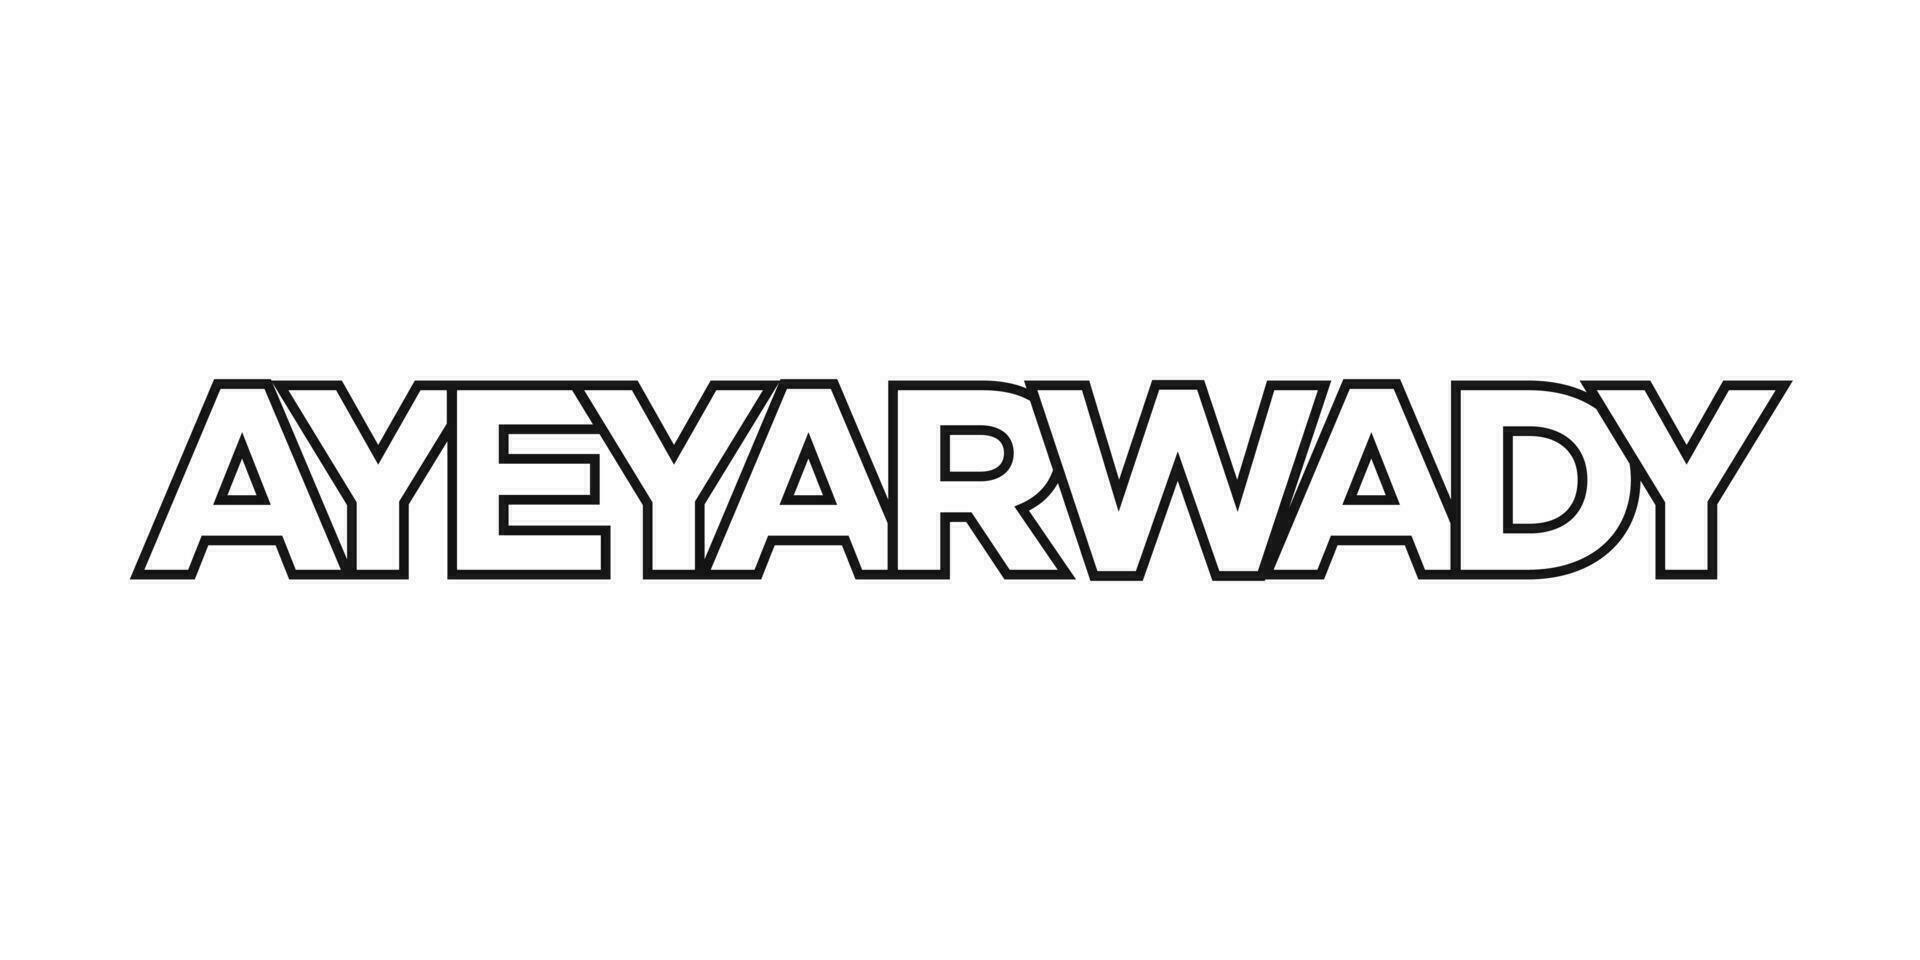 ayeyarwady i de myanmar emblem. de design funktioner en geometrisk stil, vektor illustration med djärv typografi i en modern font. de grafisk slogan text.